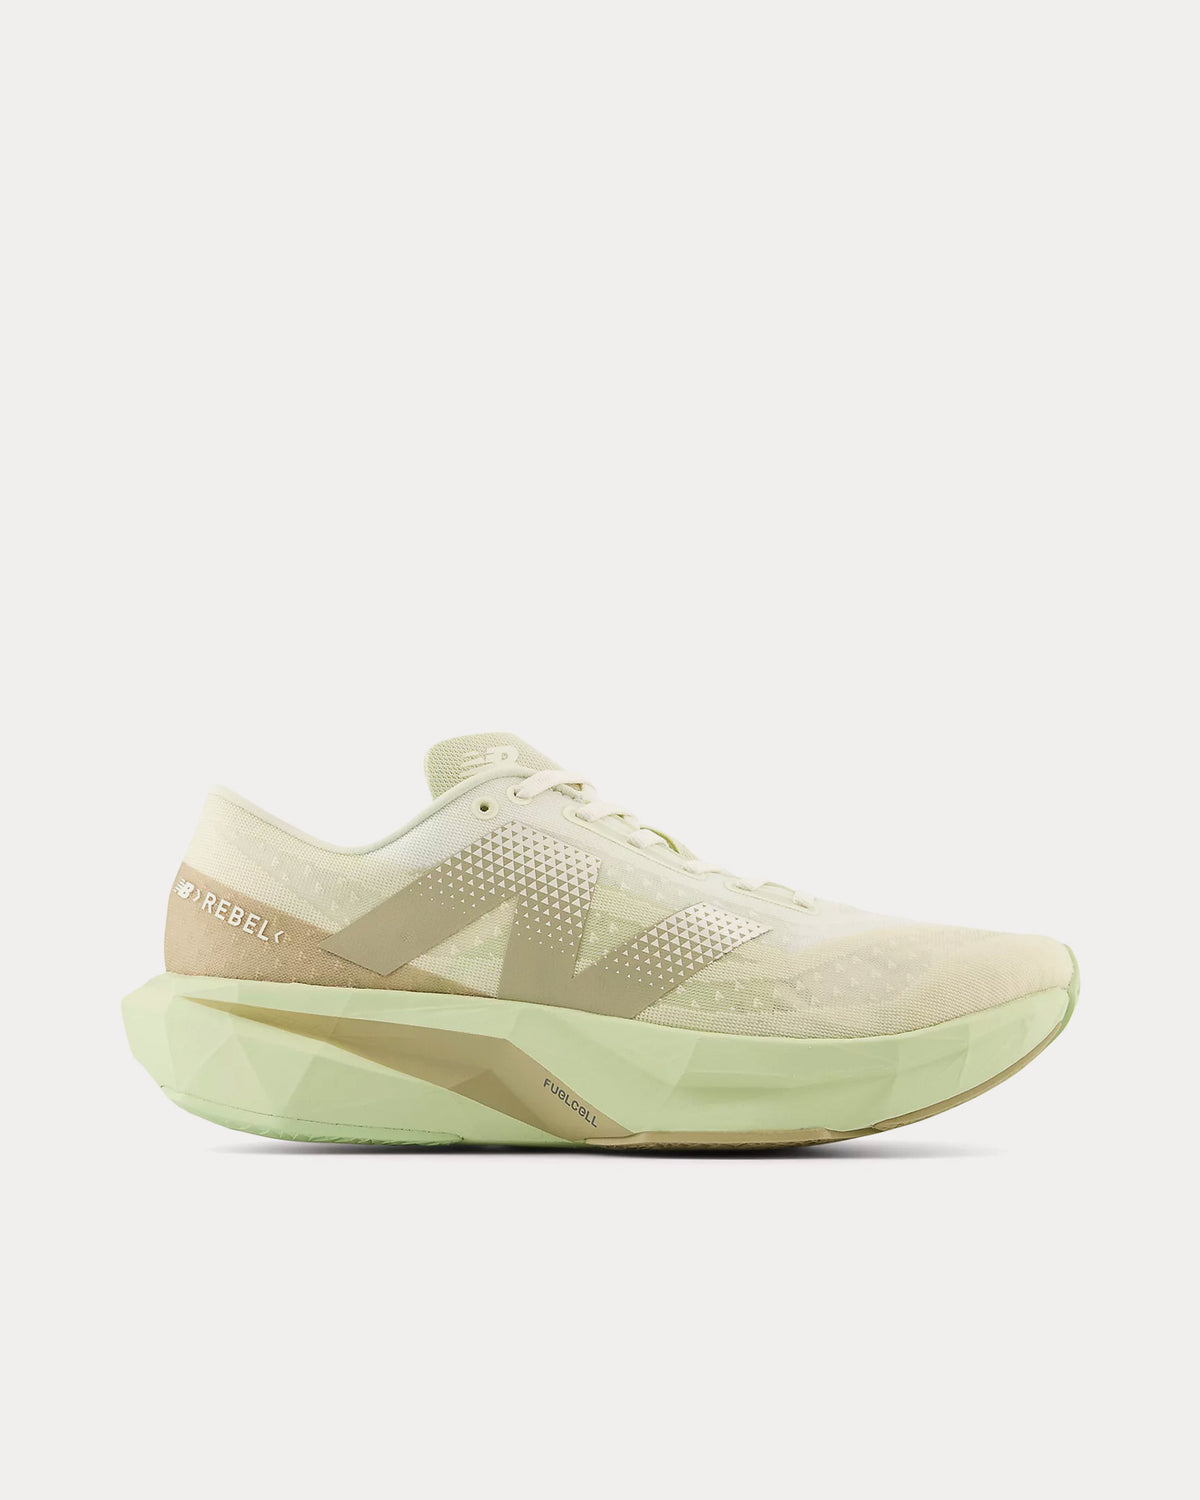 New Balance - FuelCell Rebel v4 Linen / Lichen Green / Stoneware Running Shoes